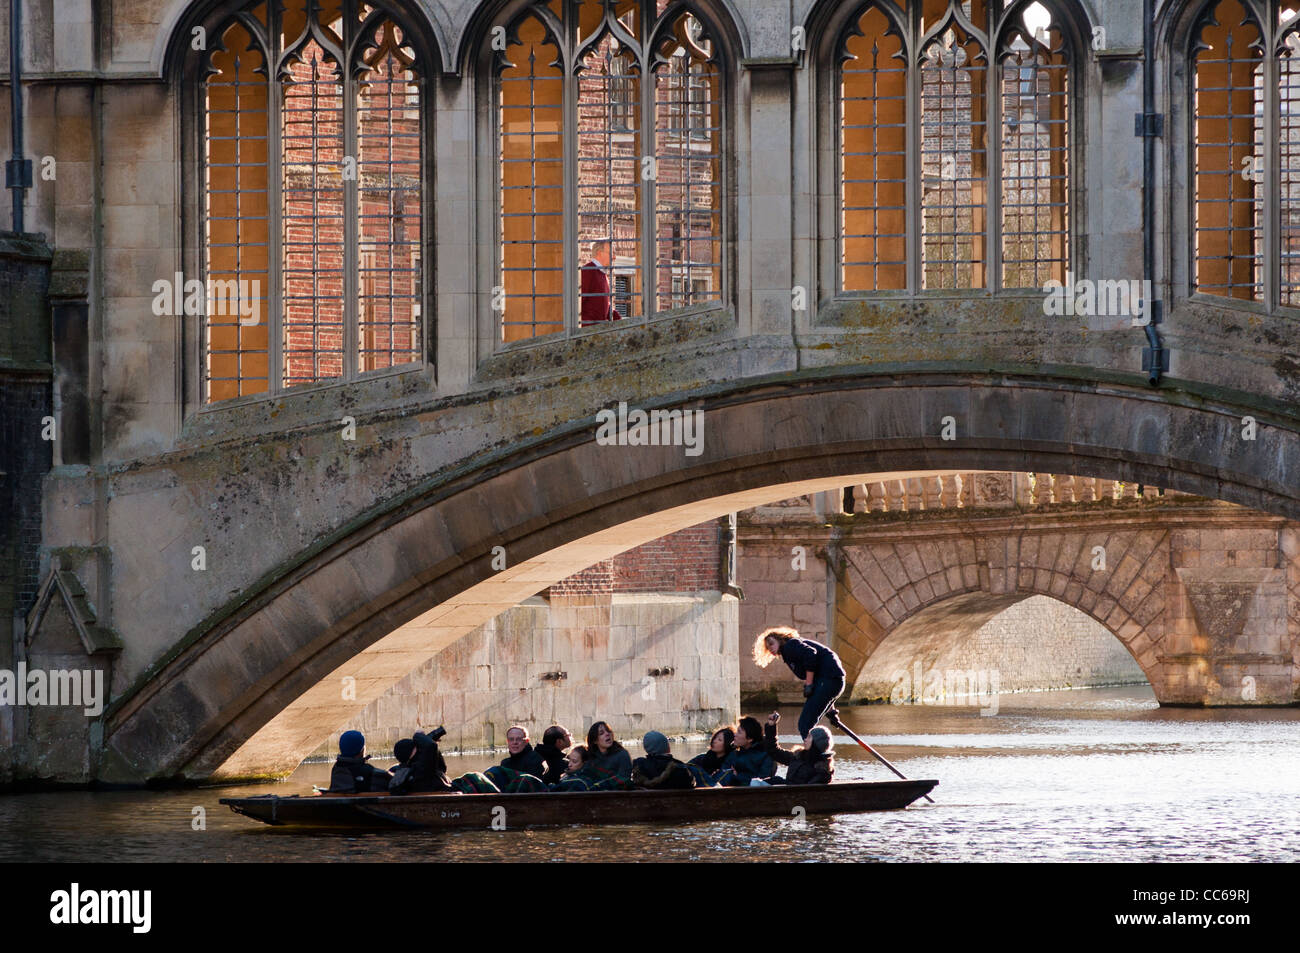 Punting under the Bridge of Sighs at St Johns College, Cambridge University, England. Stock Photo